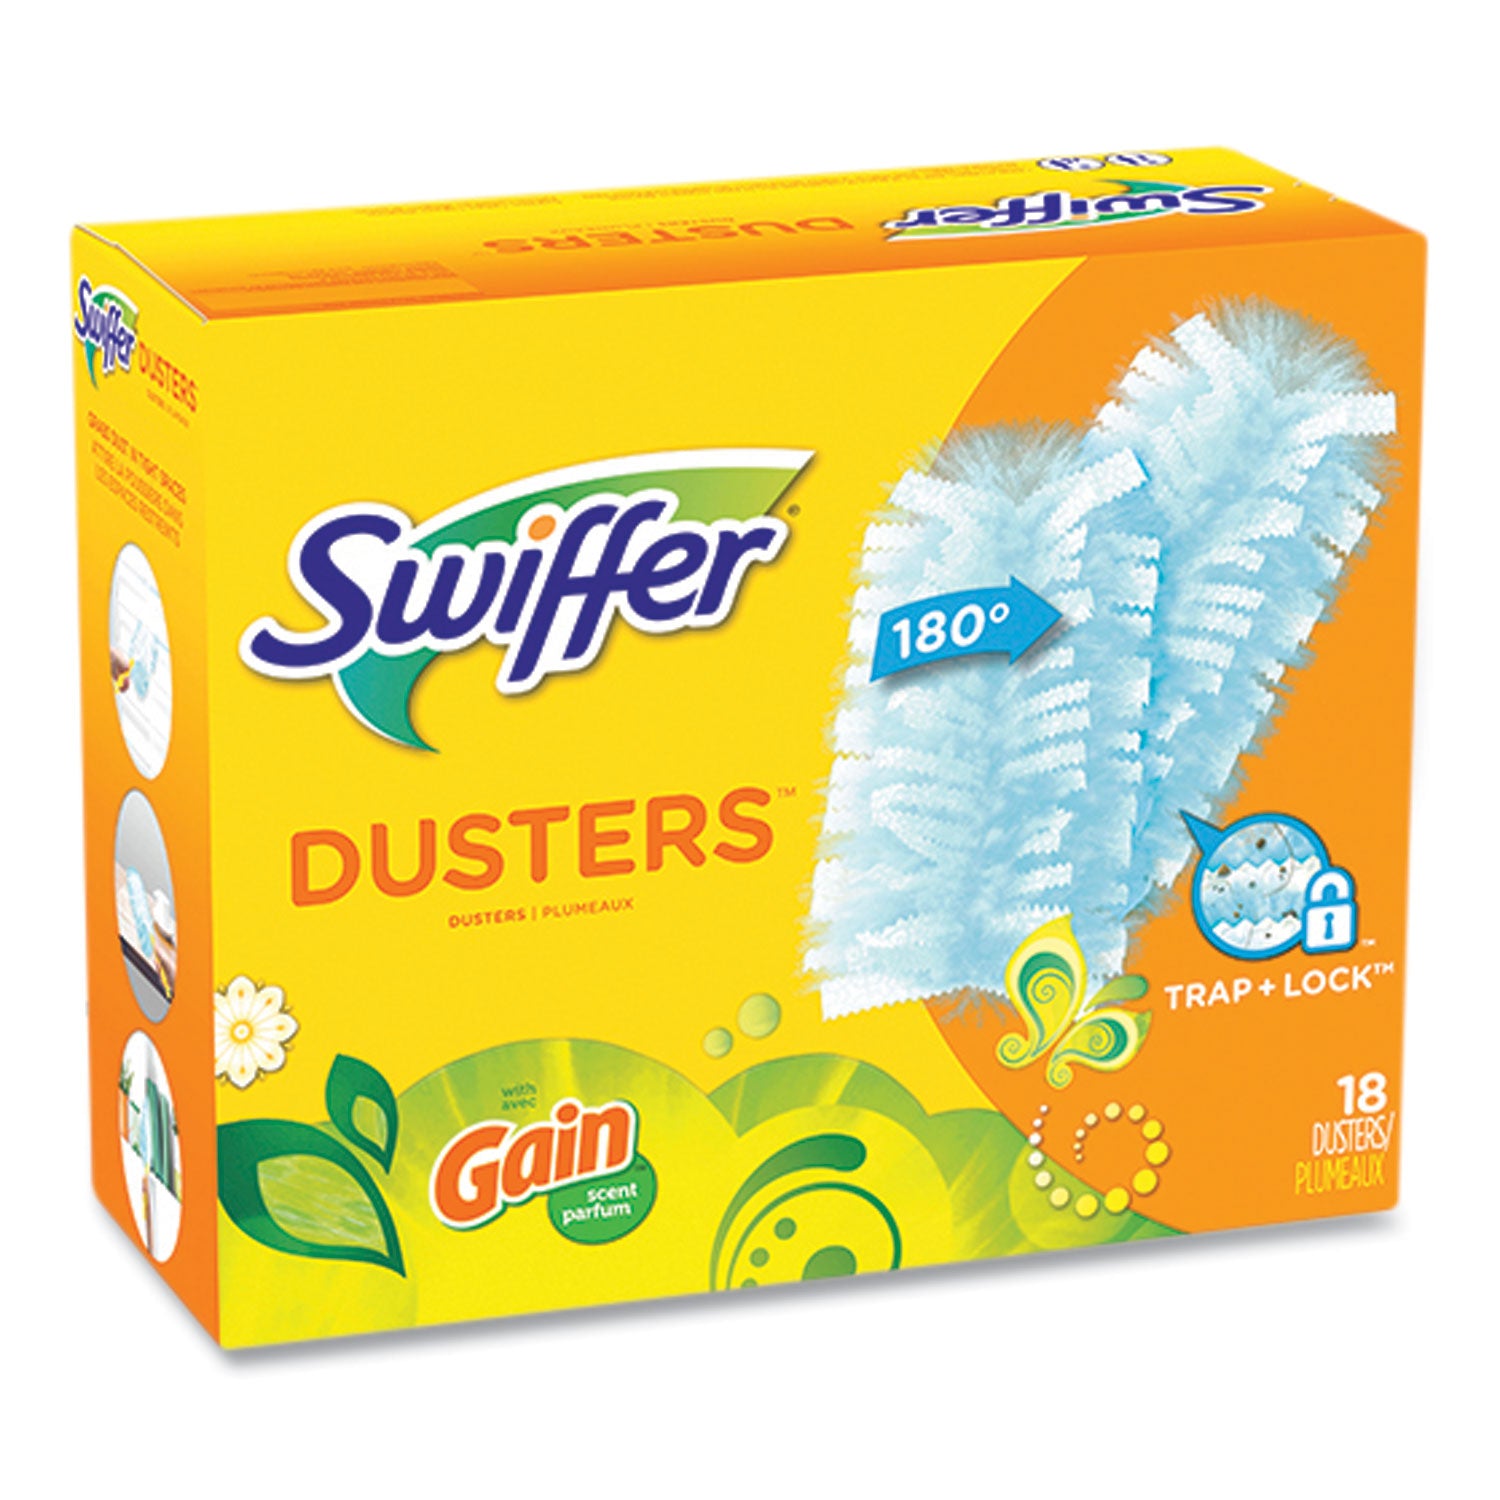 dusters-refill-dust-lock-fiber-blue-gain-original-scent-18-pack_pgc99058 - 1